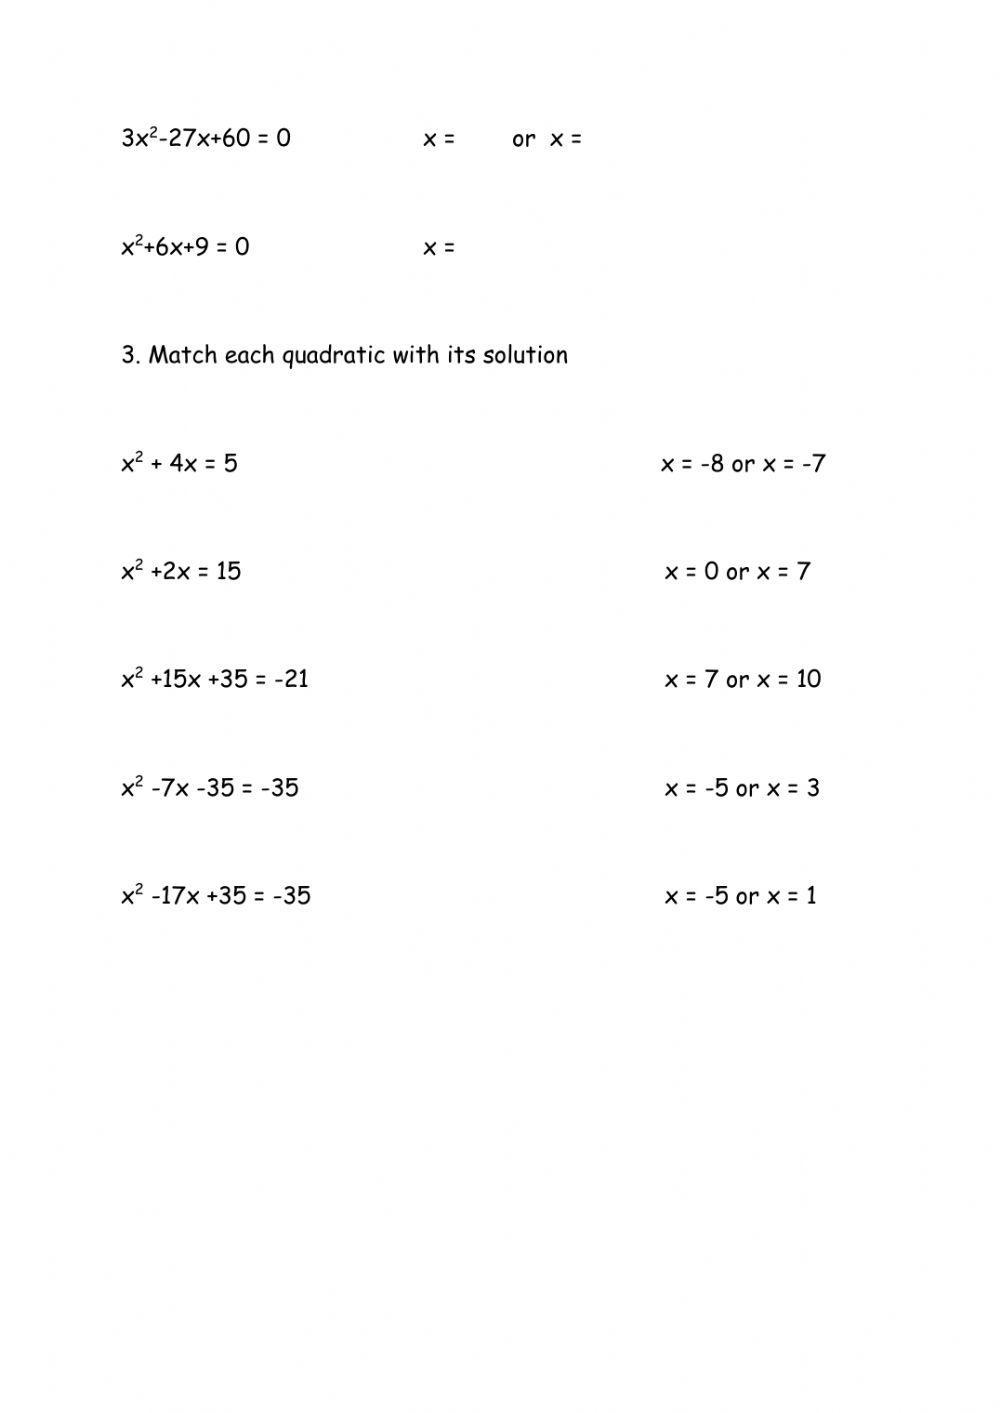 Solving quadratics by factoring